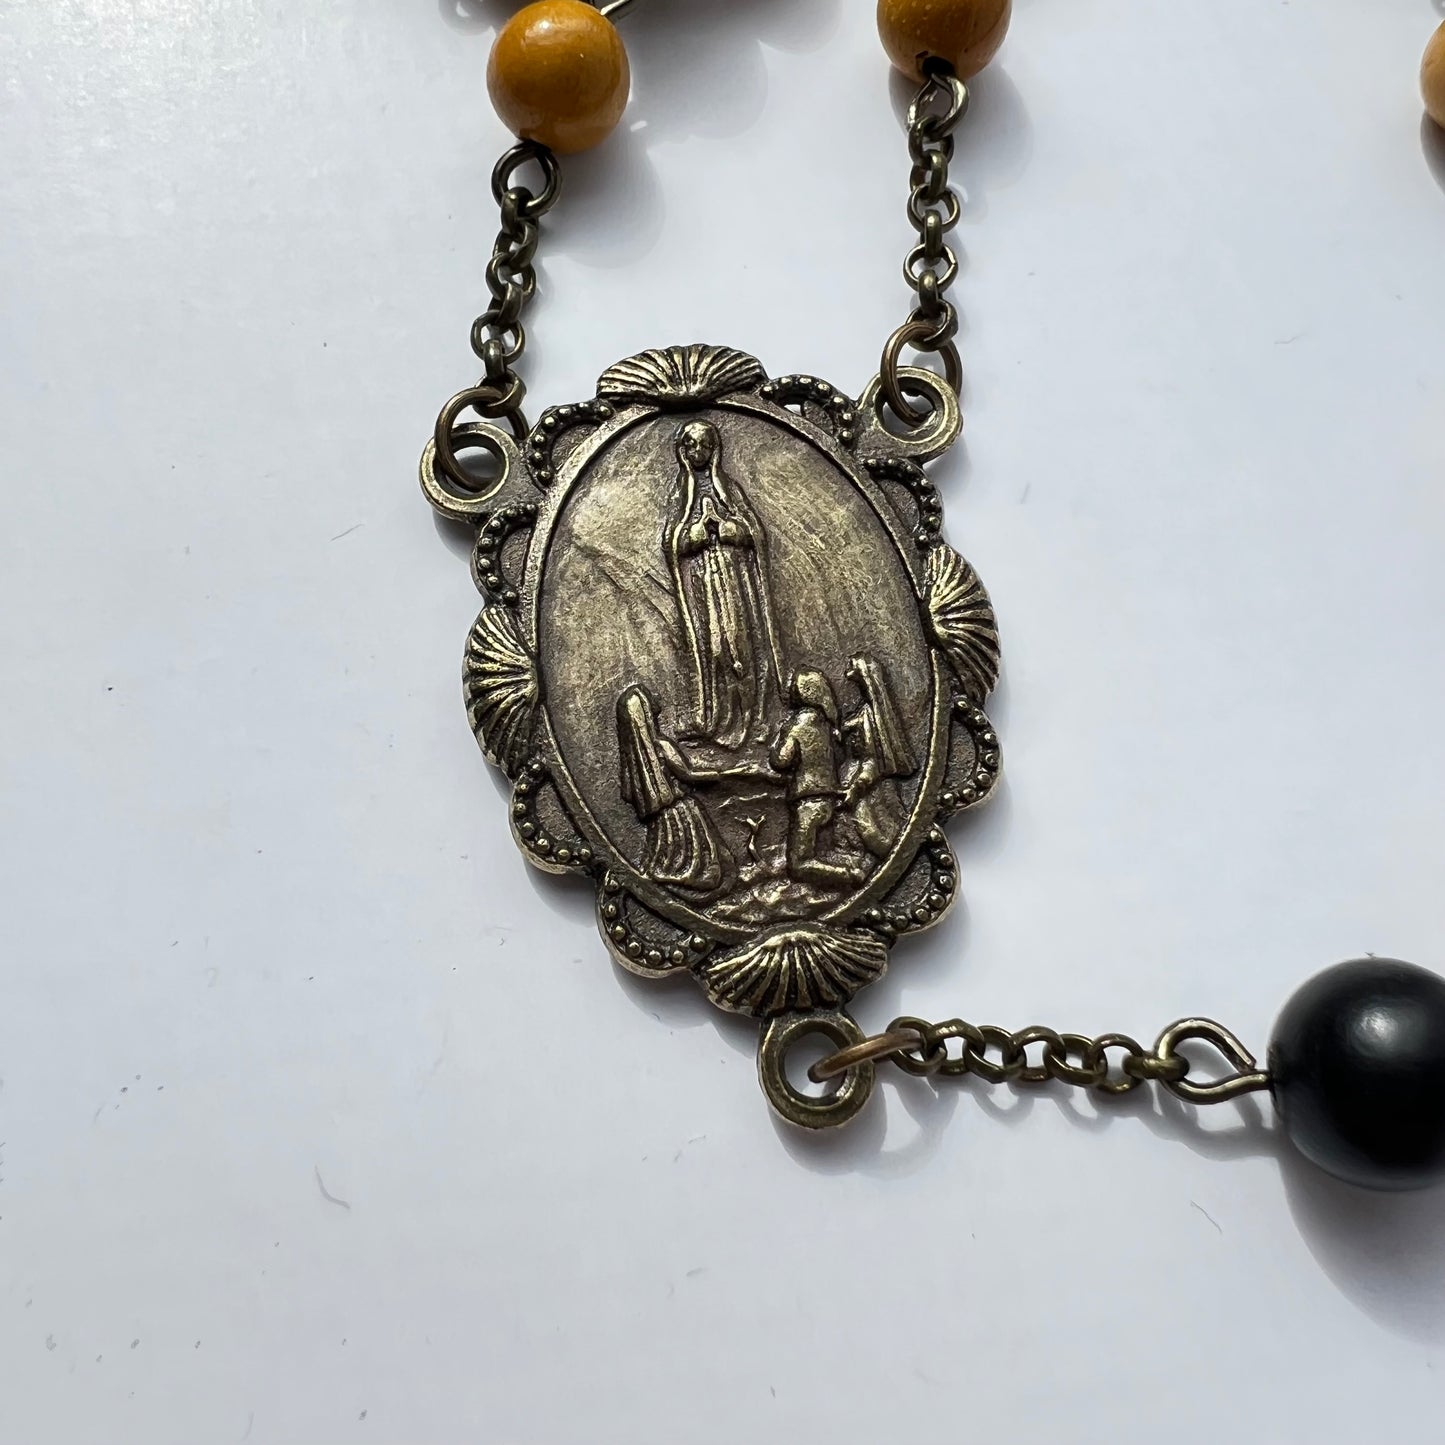 Our Lady of Fatima Rosary | Yellow Mookaite & Ebony Wood Beads